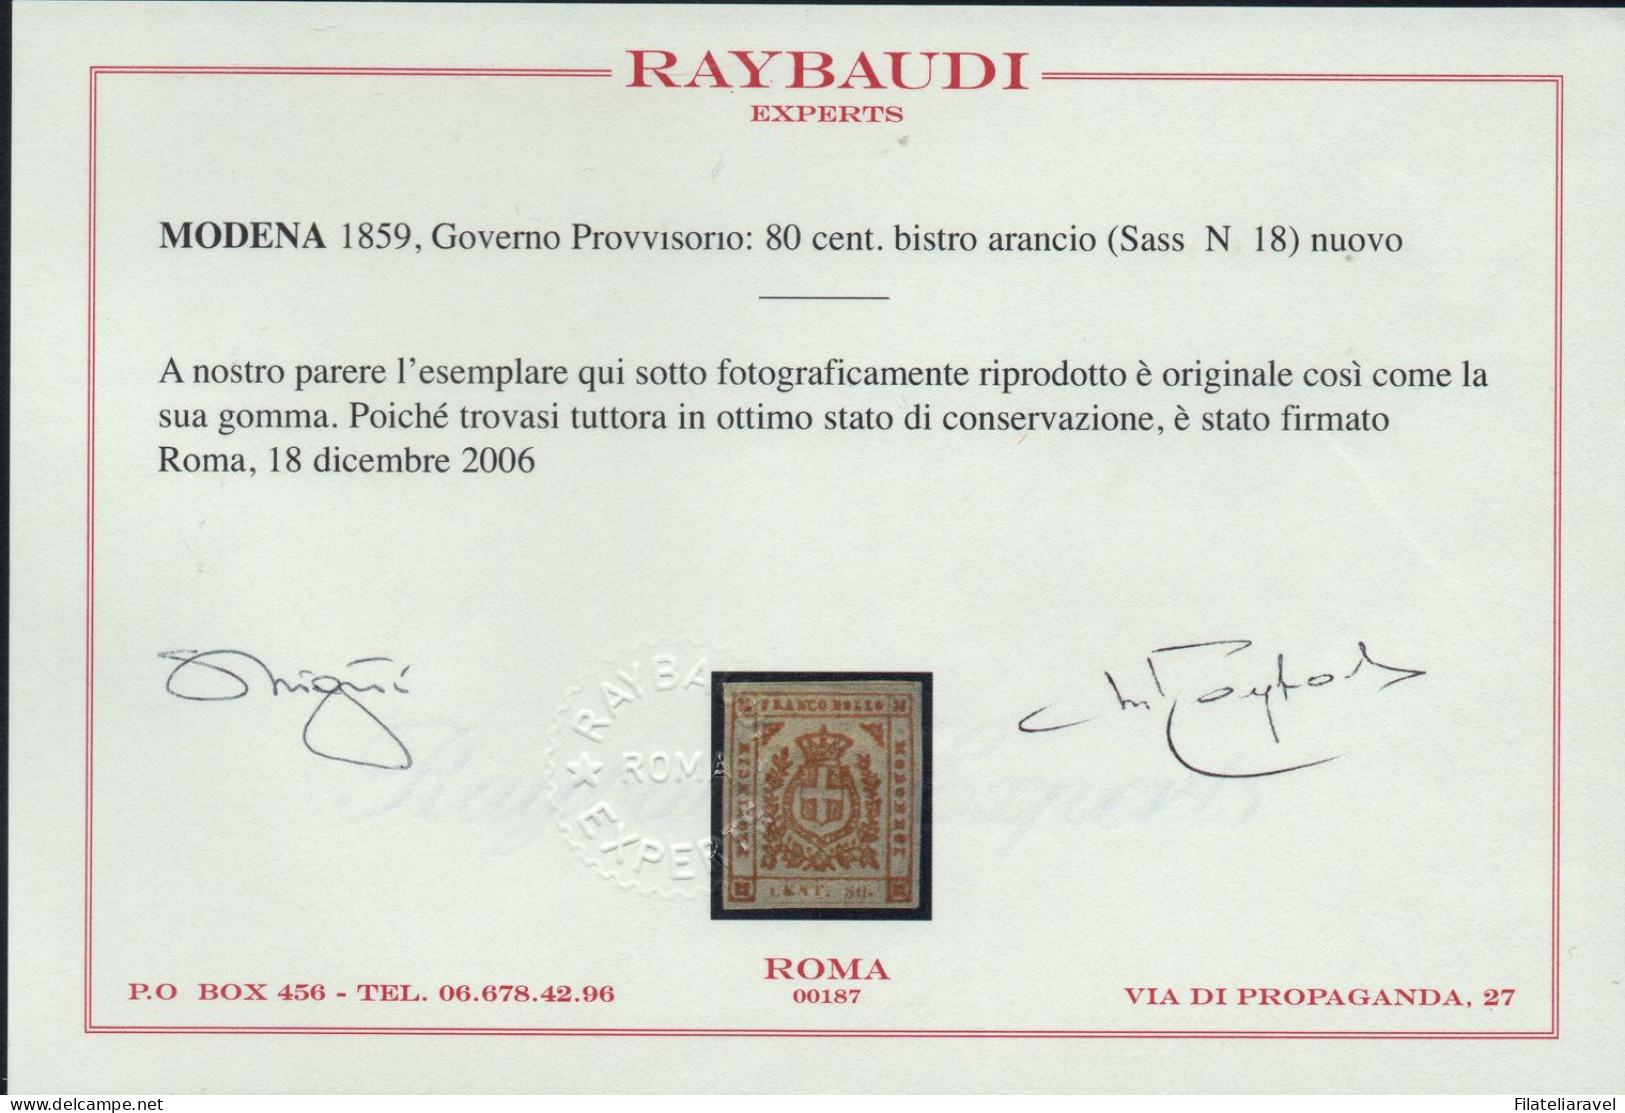 * 1859 Modena Governo Provvisorio - serie completa (12/18) -  6 certificati ,Bolaffi, Diena, Raybaudi - (13.350)